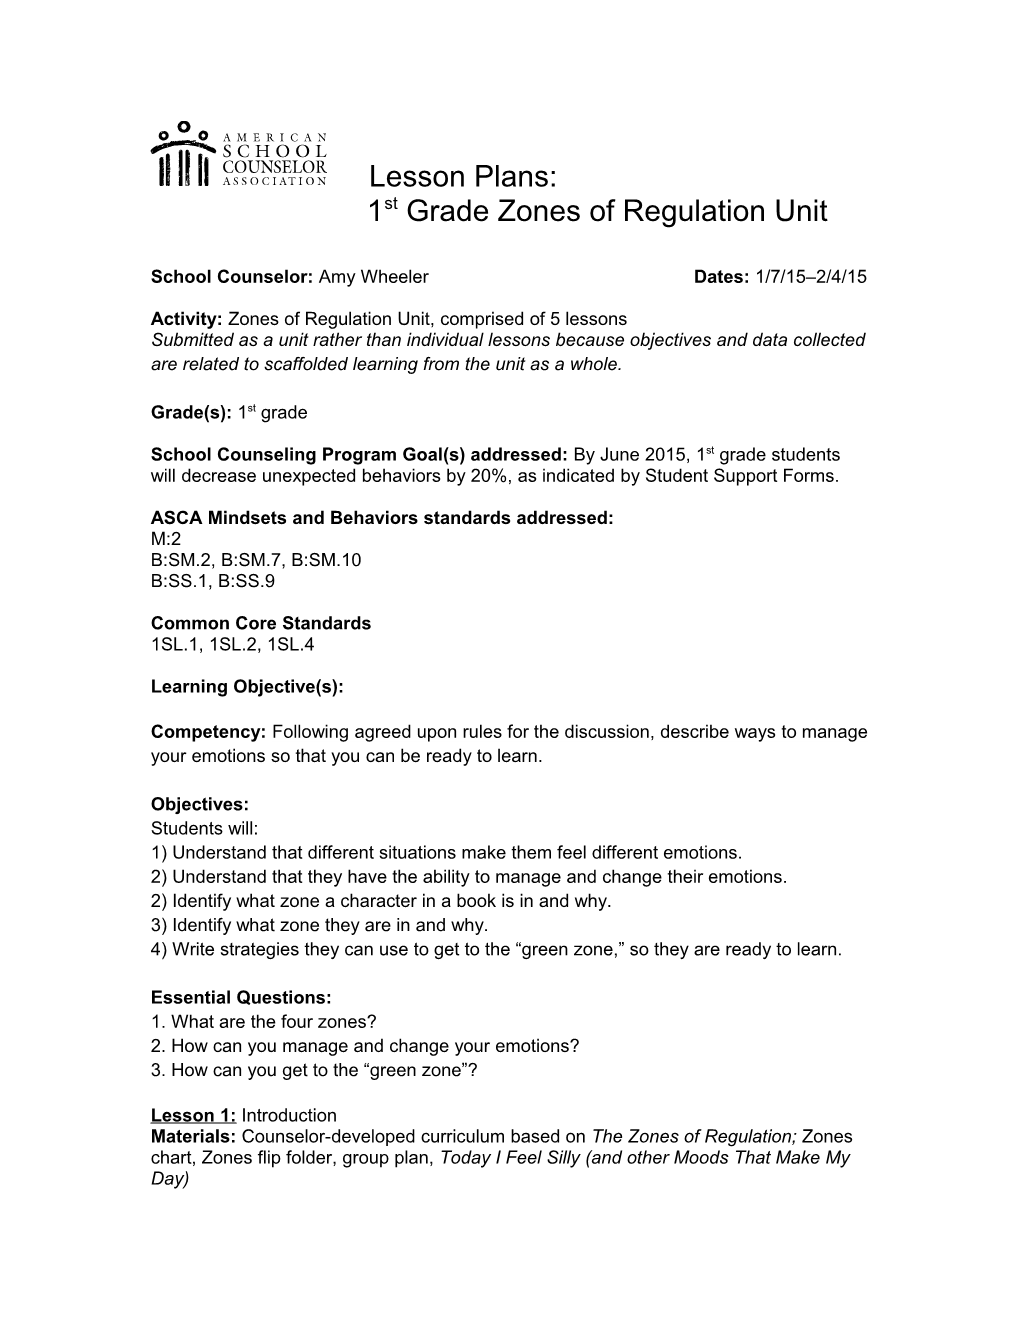 1St Grade Zones of Regulation Unit